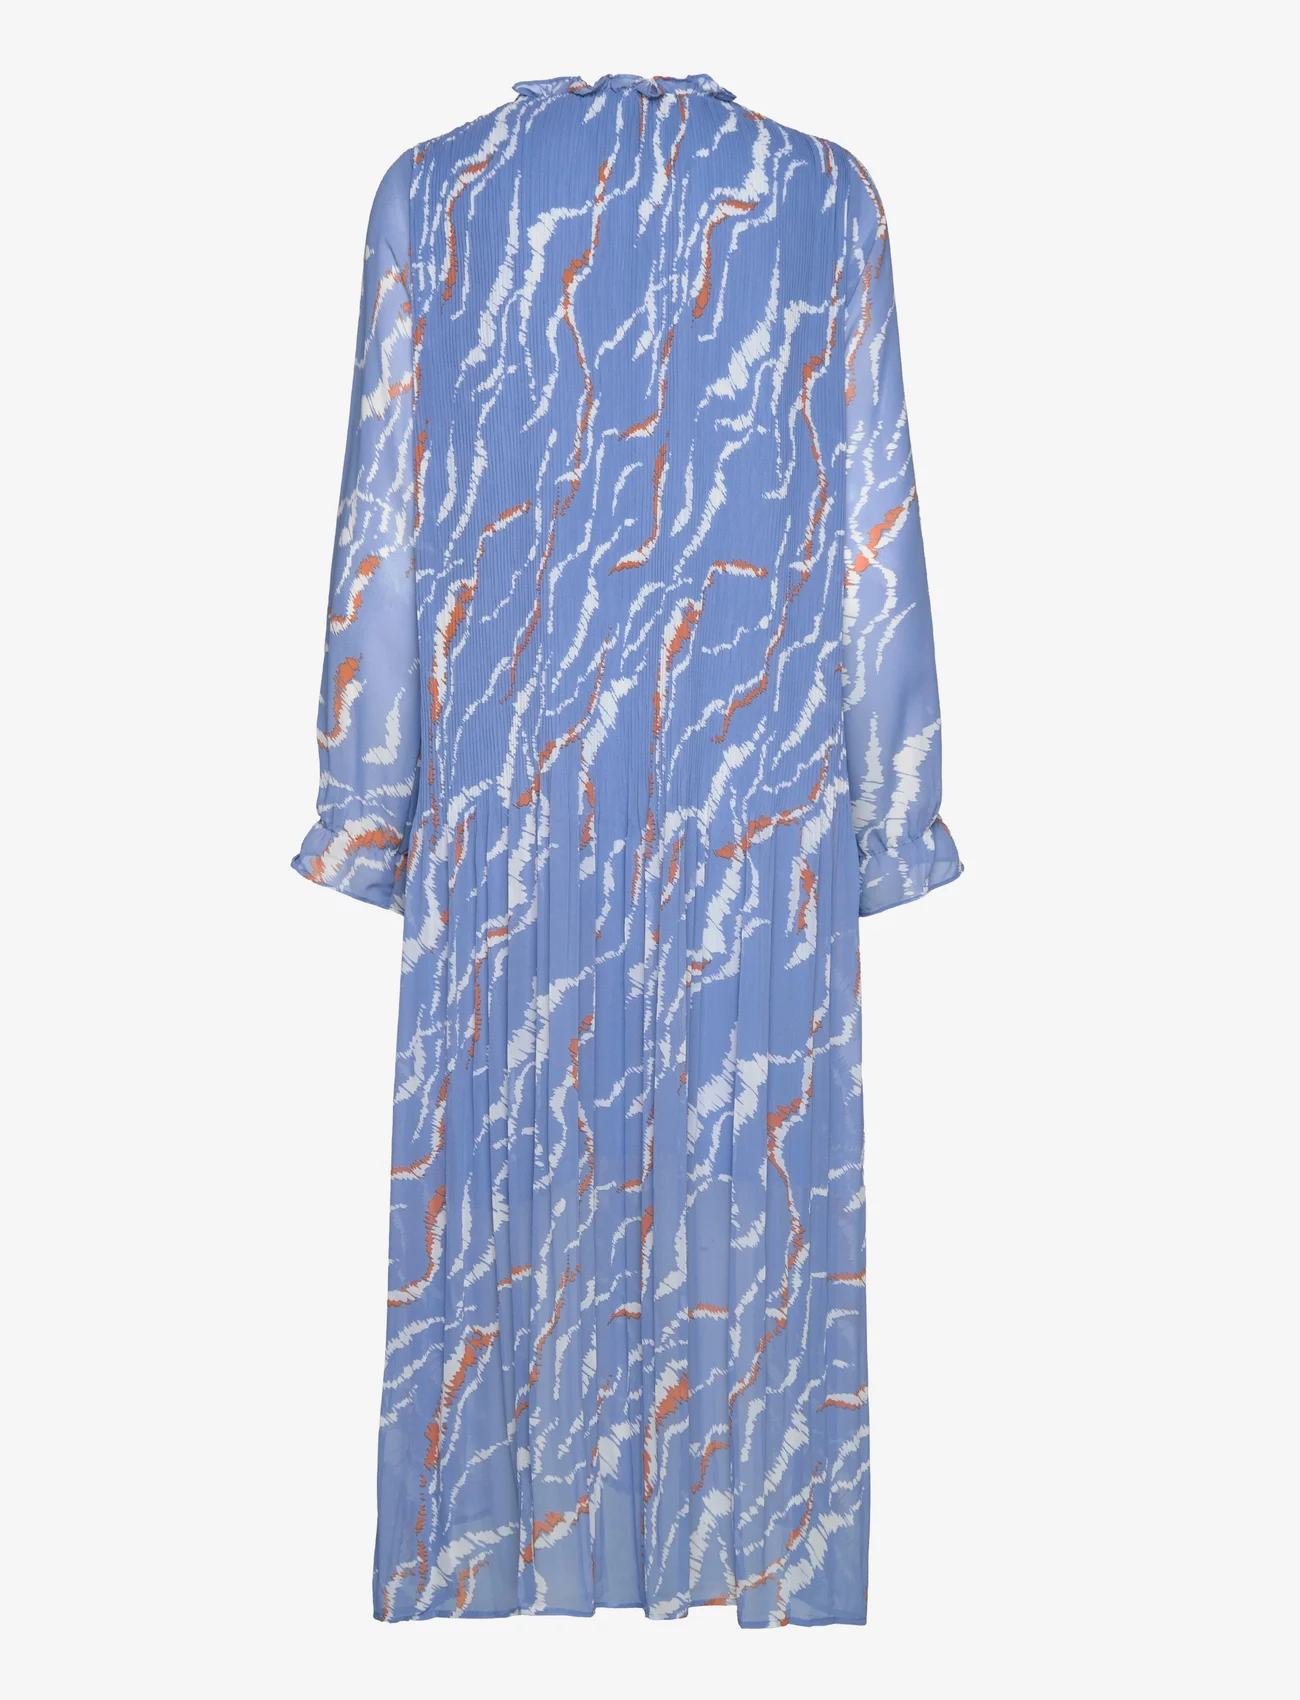 Minus - Rikka Mia V-neck Long Dress - denim blue graphic print - 1